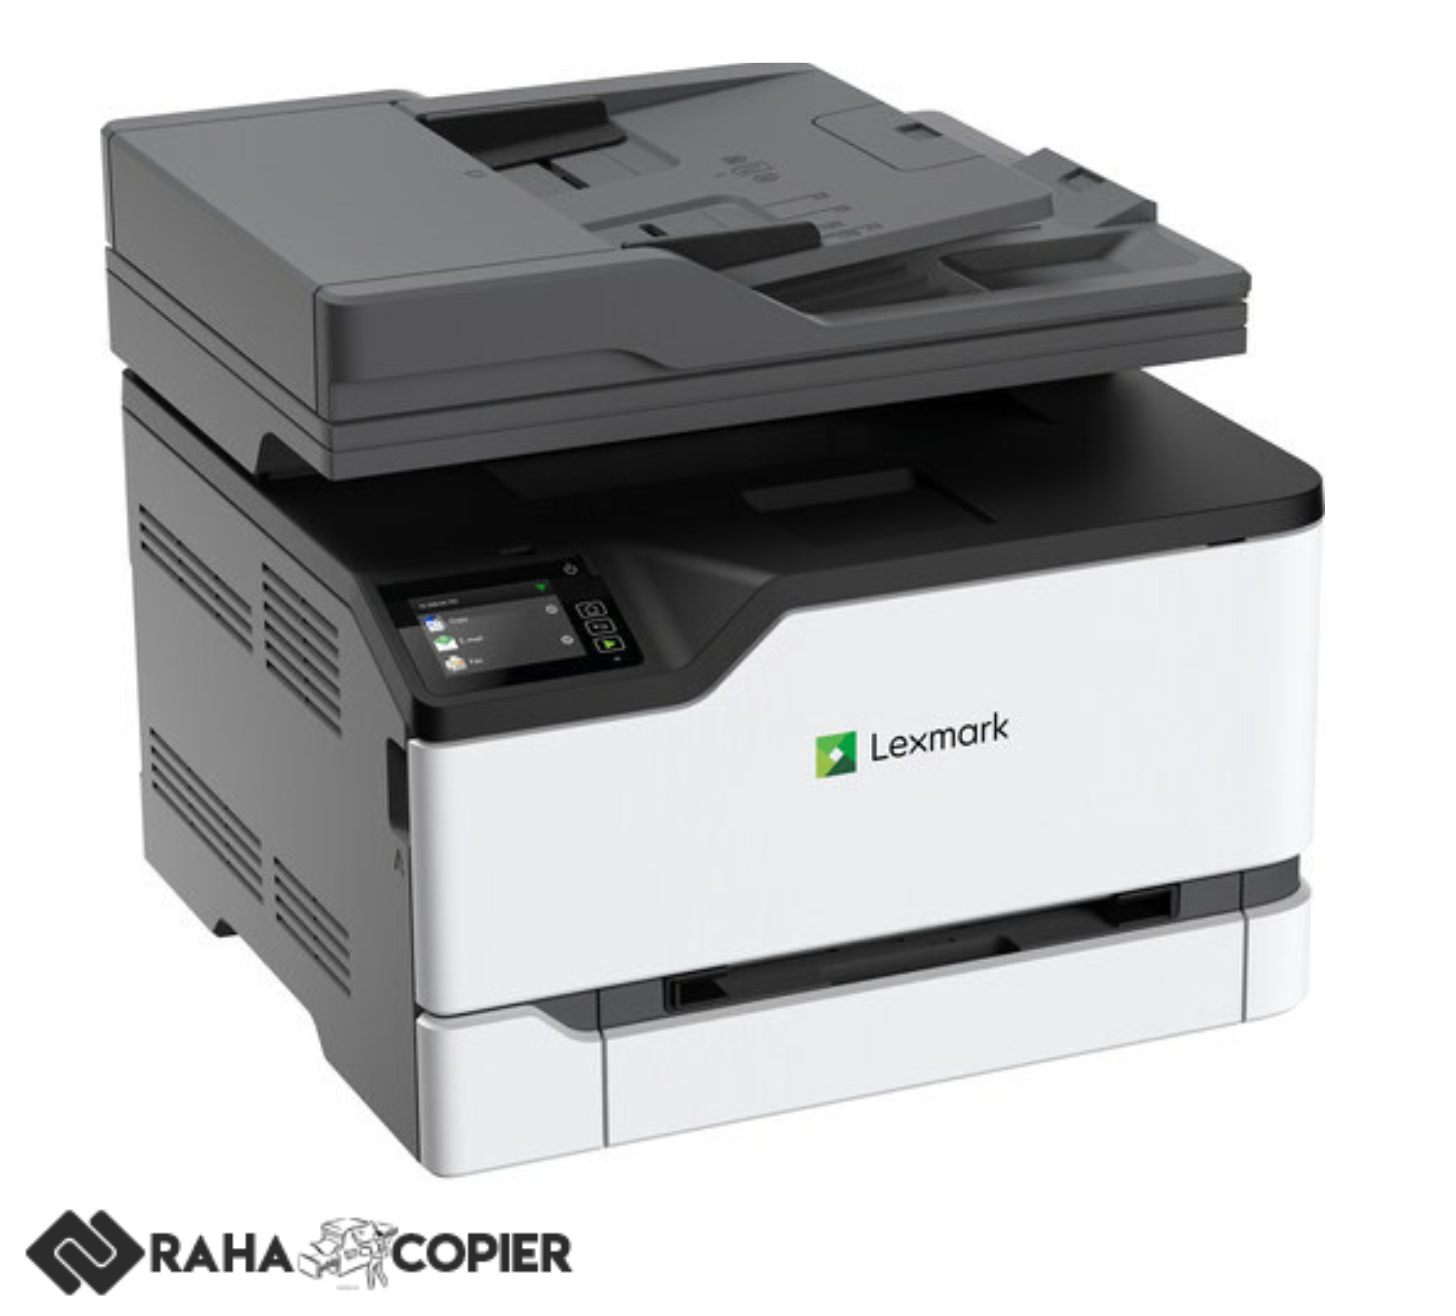 image of lexmark printer for rental